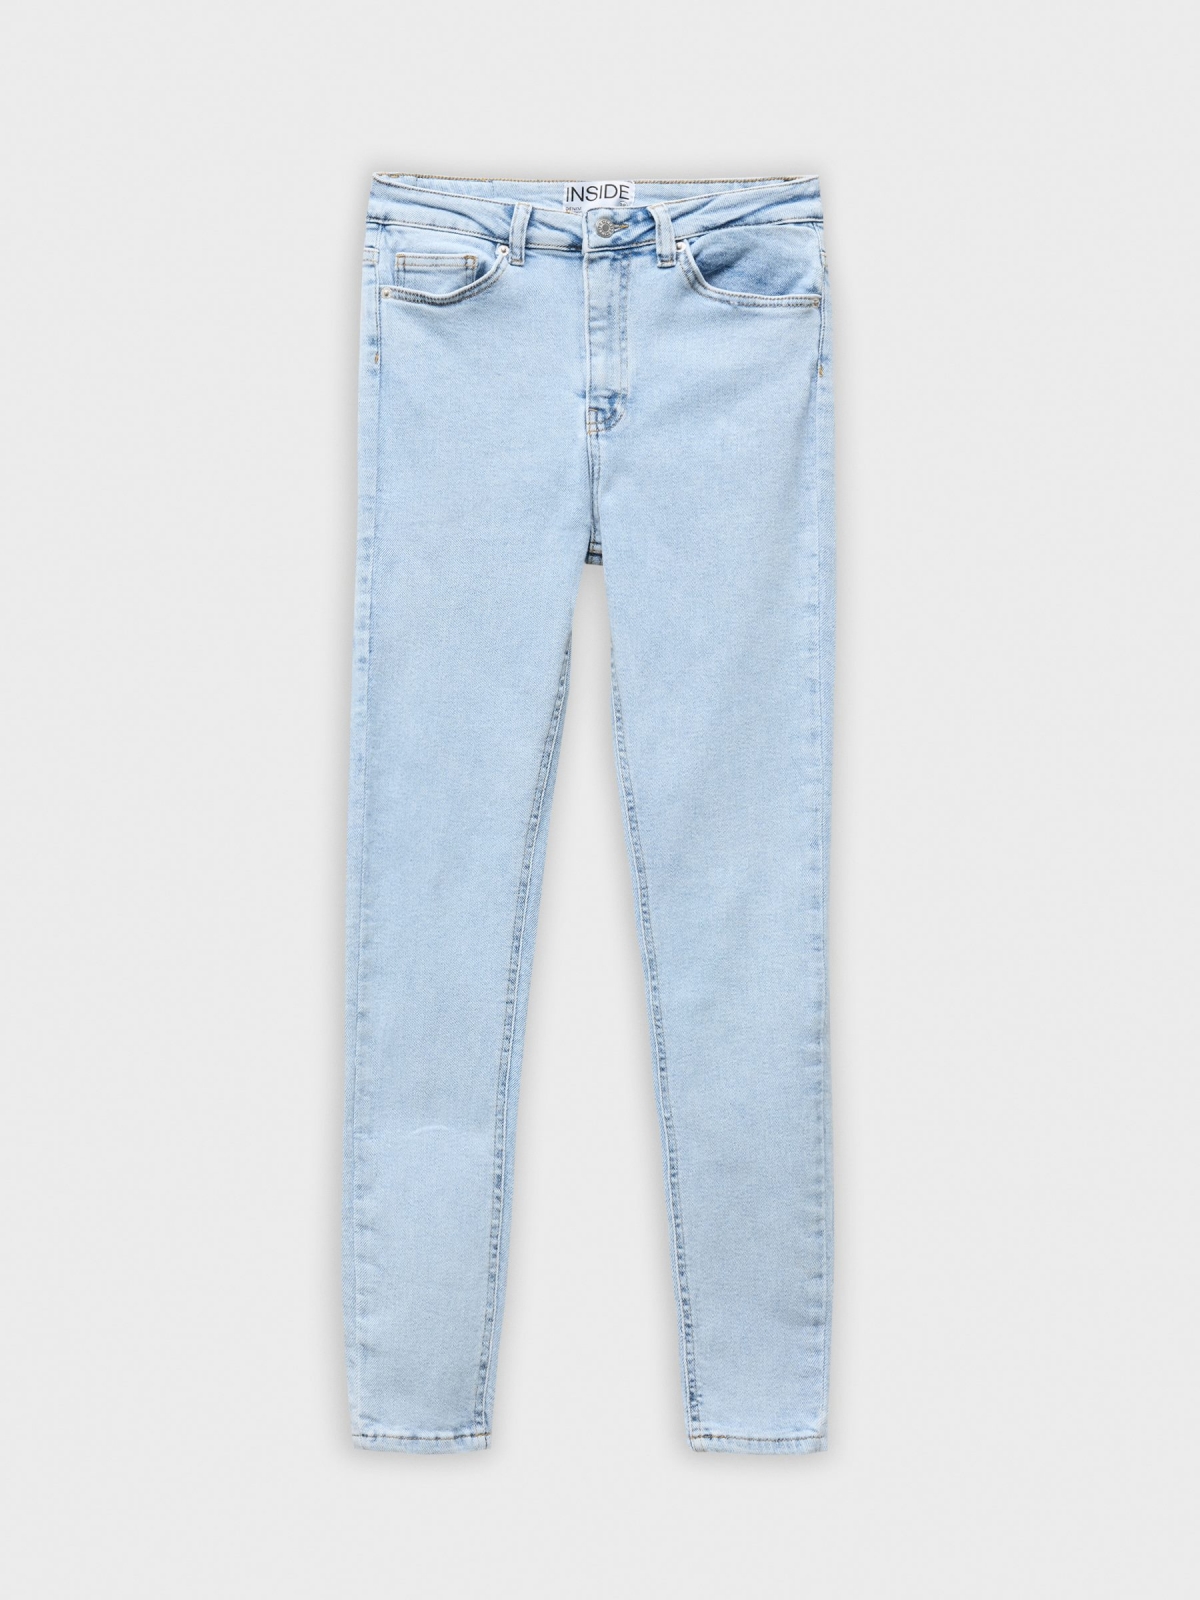  Jeans skinny tiro alto azul claro